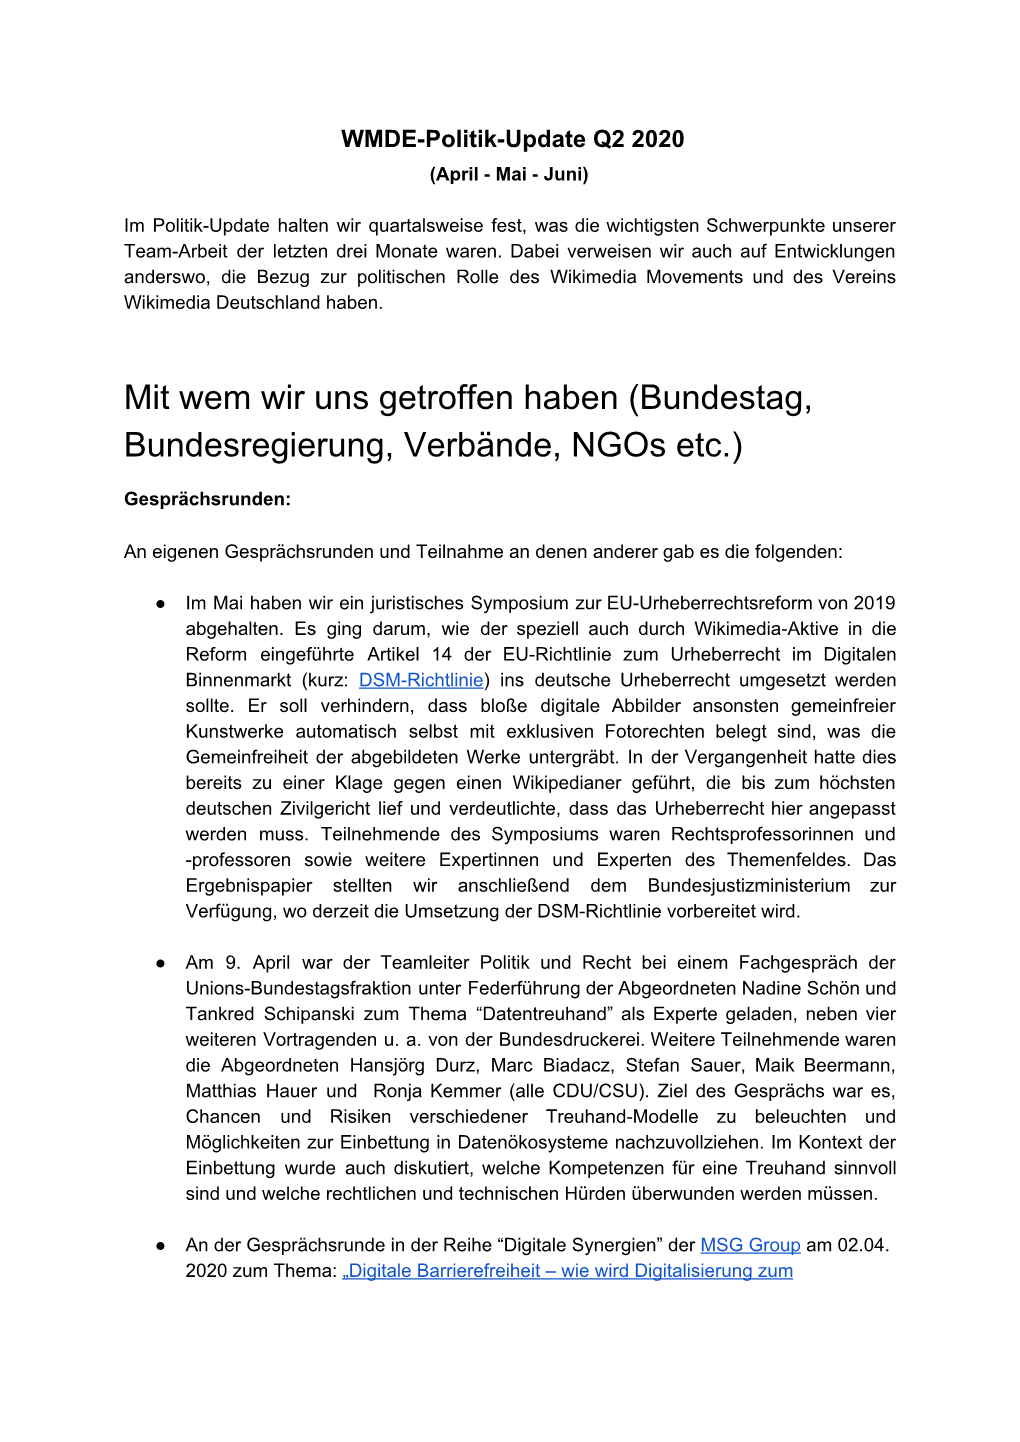 Bundestag, Bundesregierung, Verbände, Ngos Etc.)